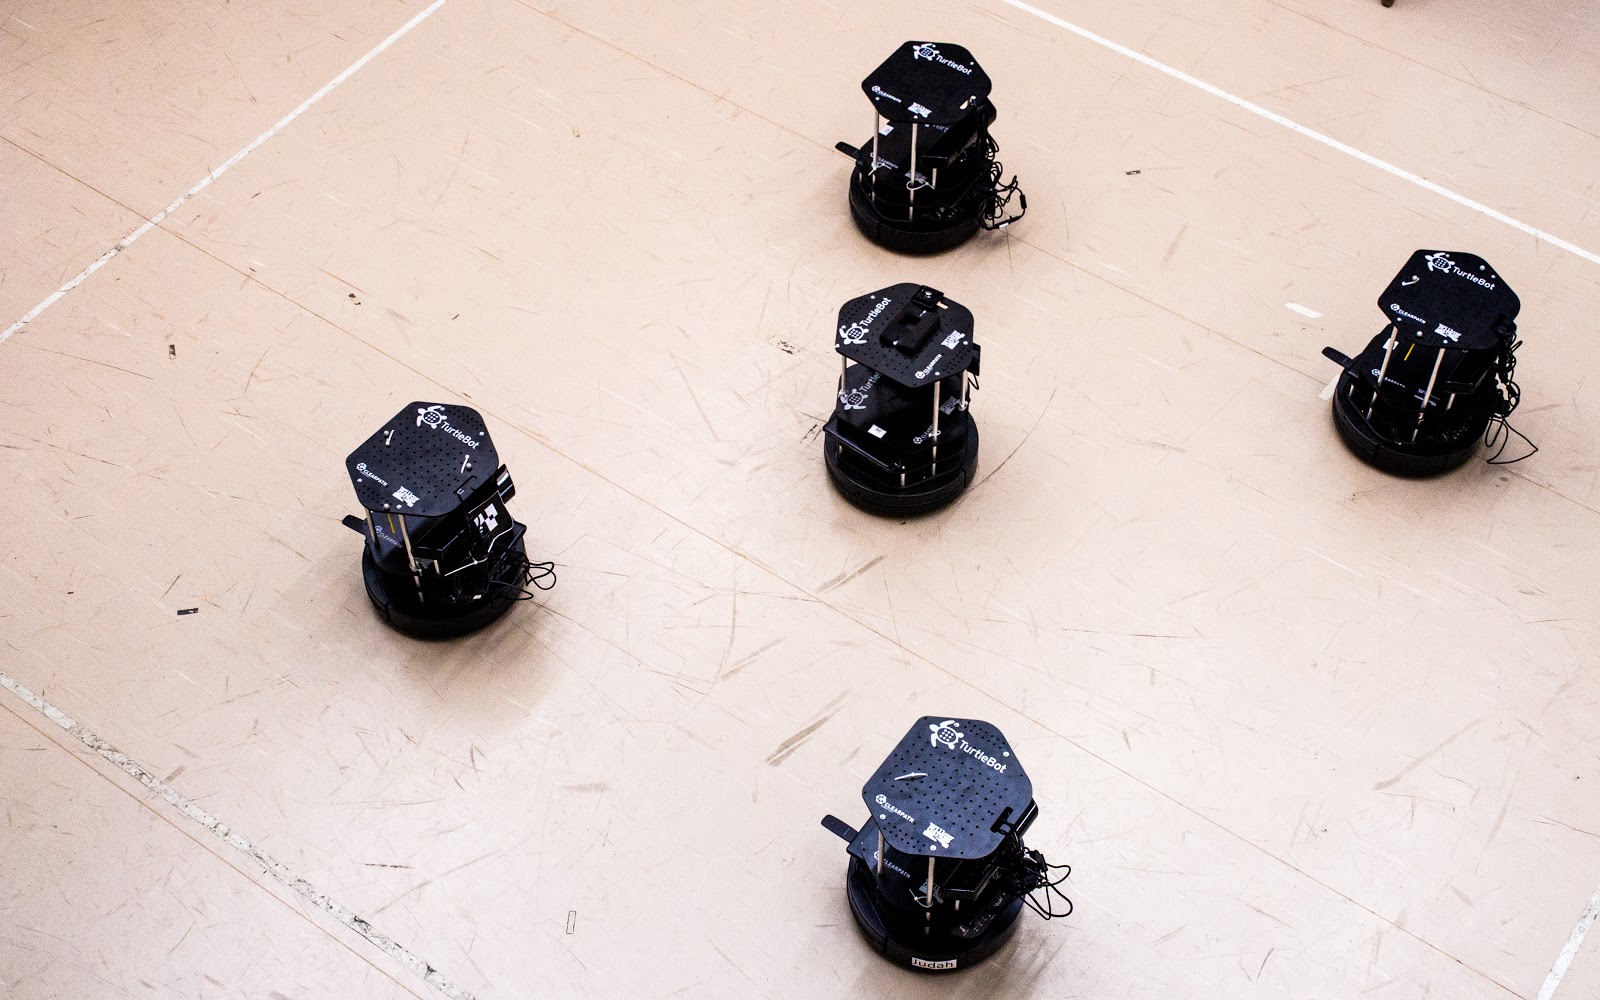 Formation control strategies for TurtleBotII Robots